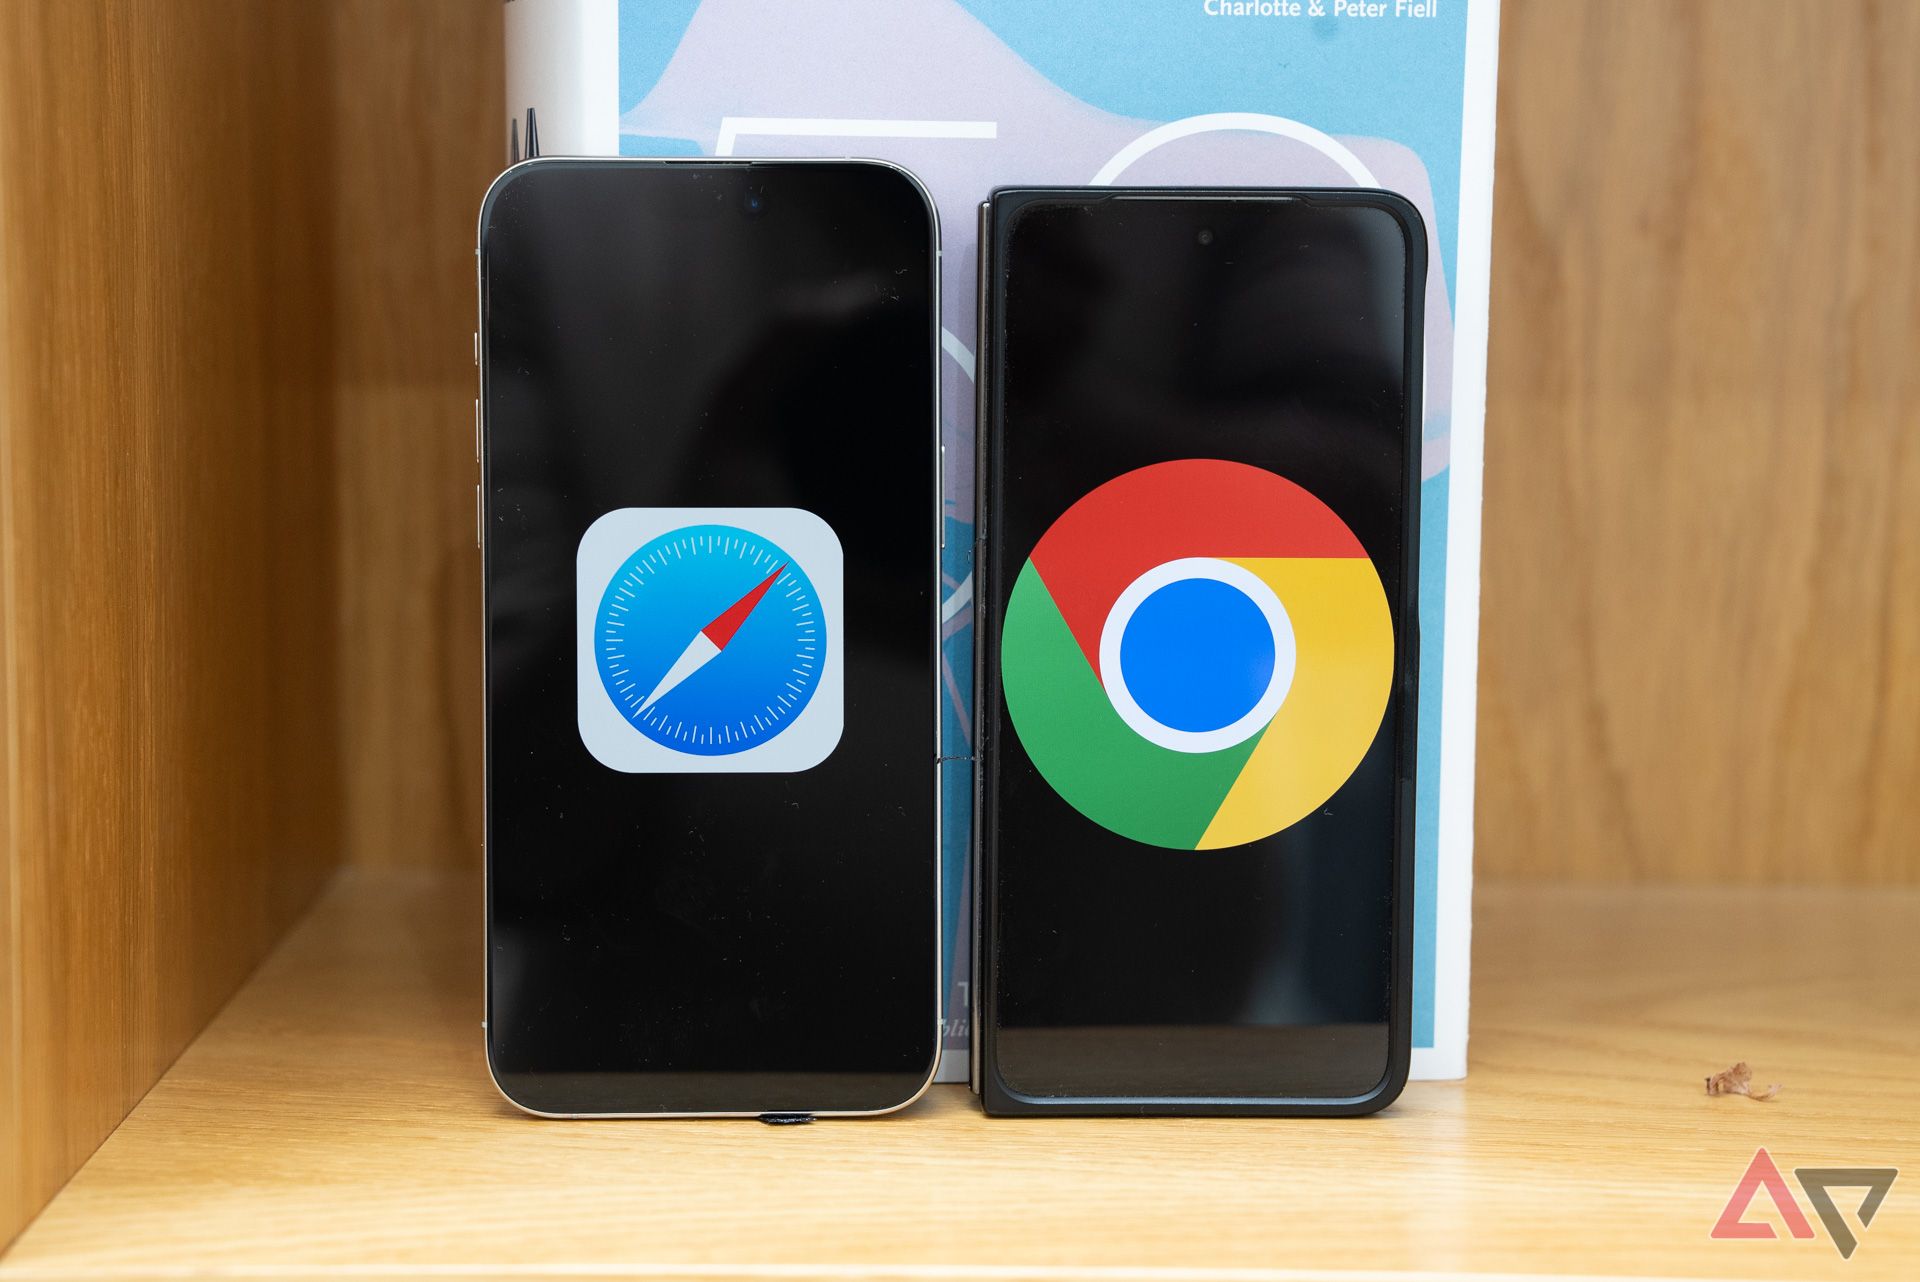 O iPhone e o OnePlus Open mostrando os logotipos Safari e Chrome.